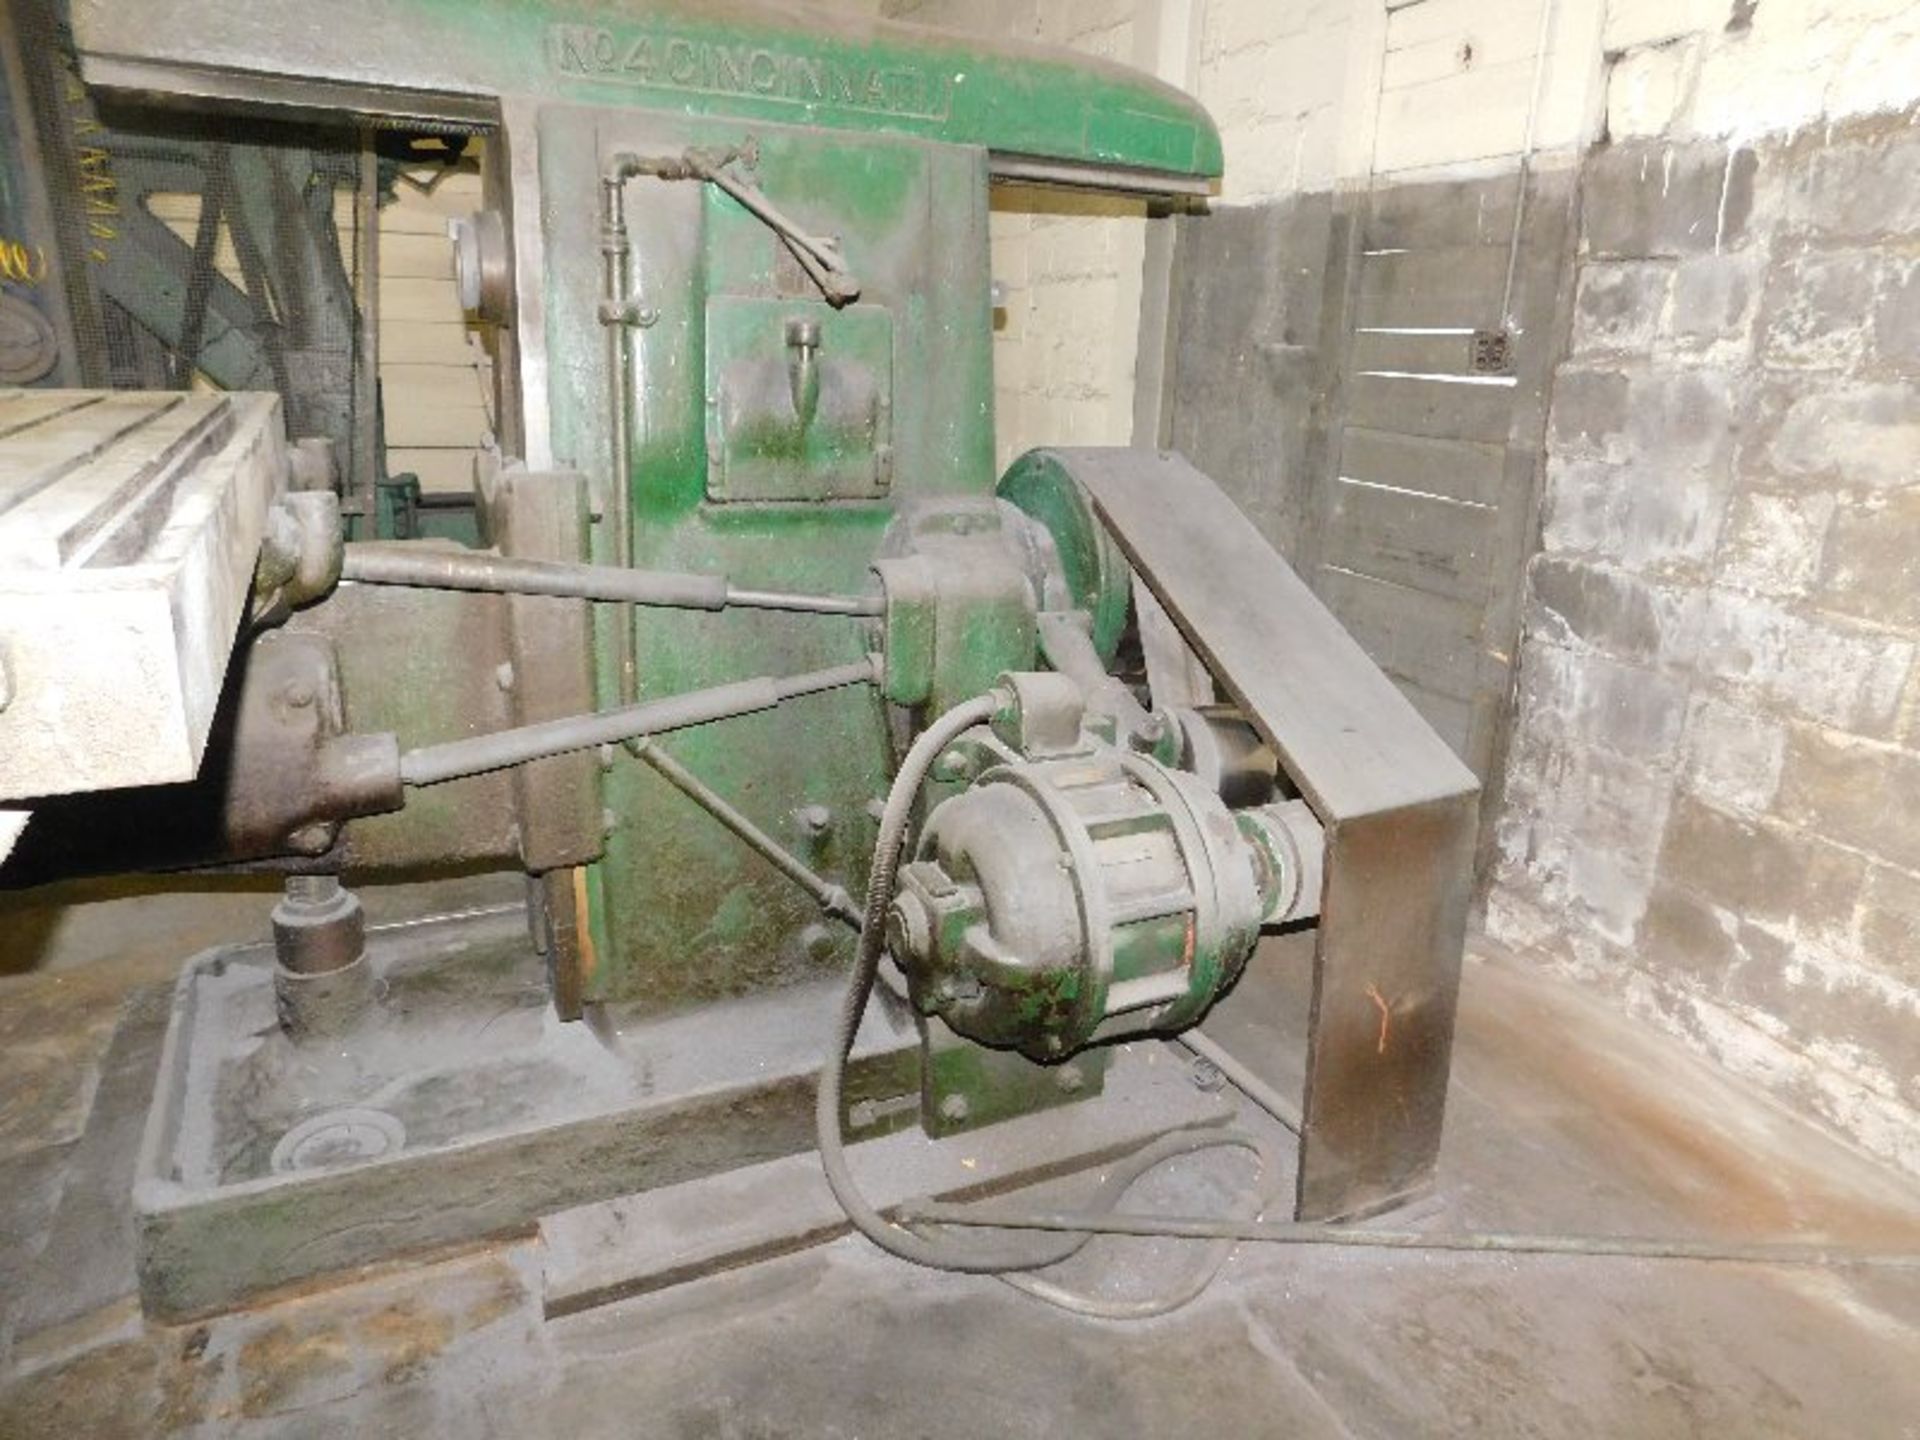 Cincinnati No 4 Universal Horizontal Milling Machine, 72" X 18" Bed, S/N B378A - Image 3 of 3